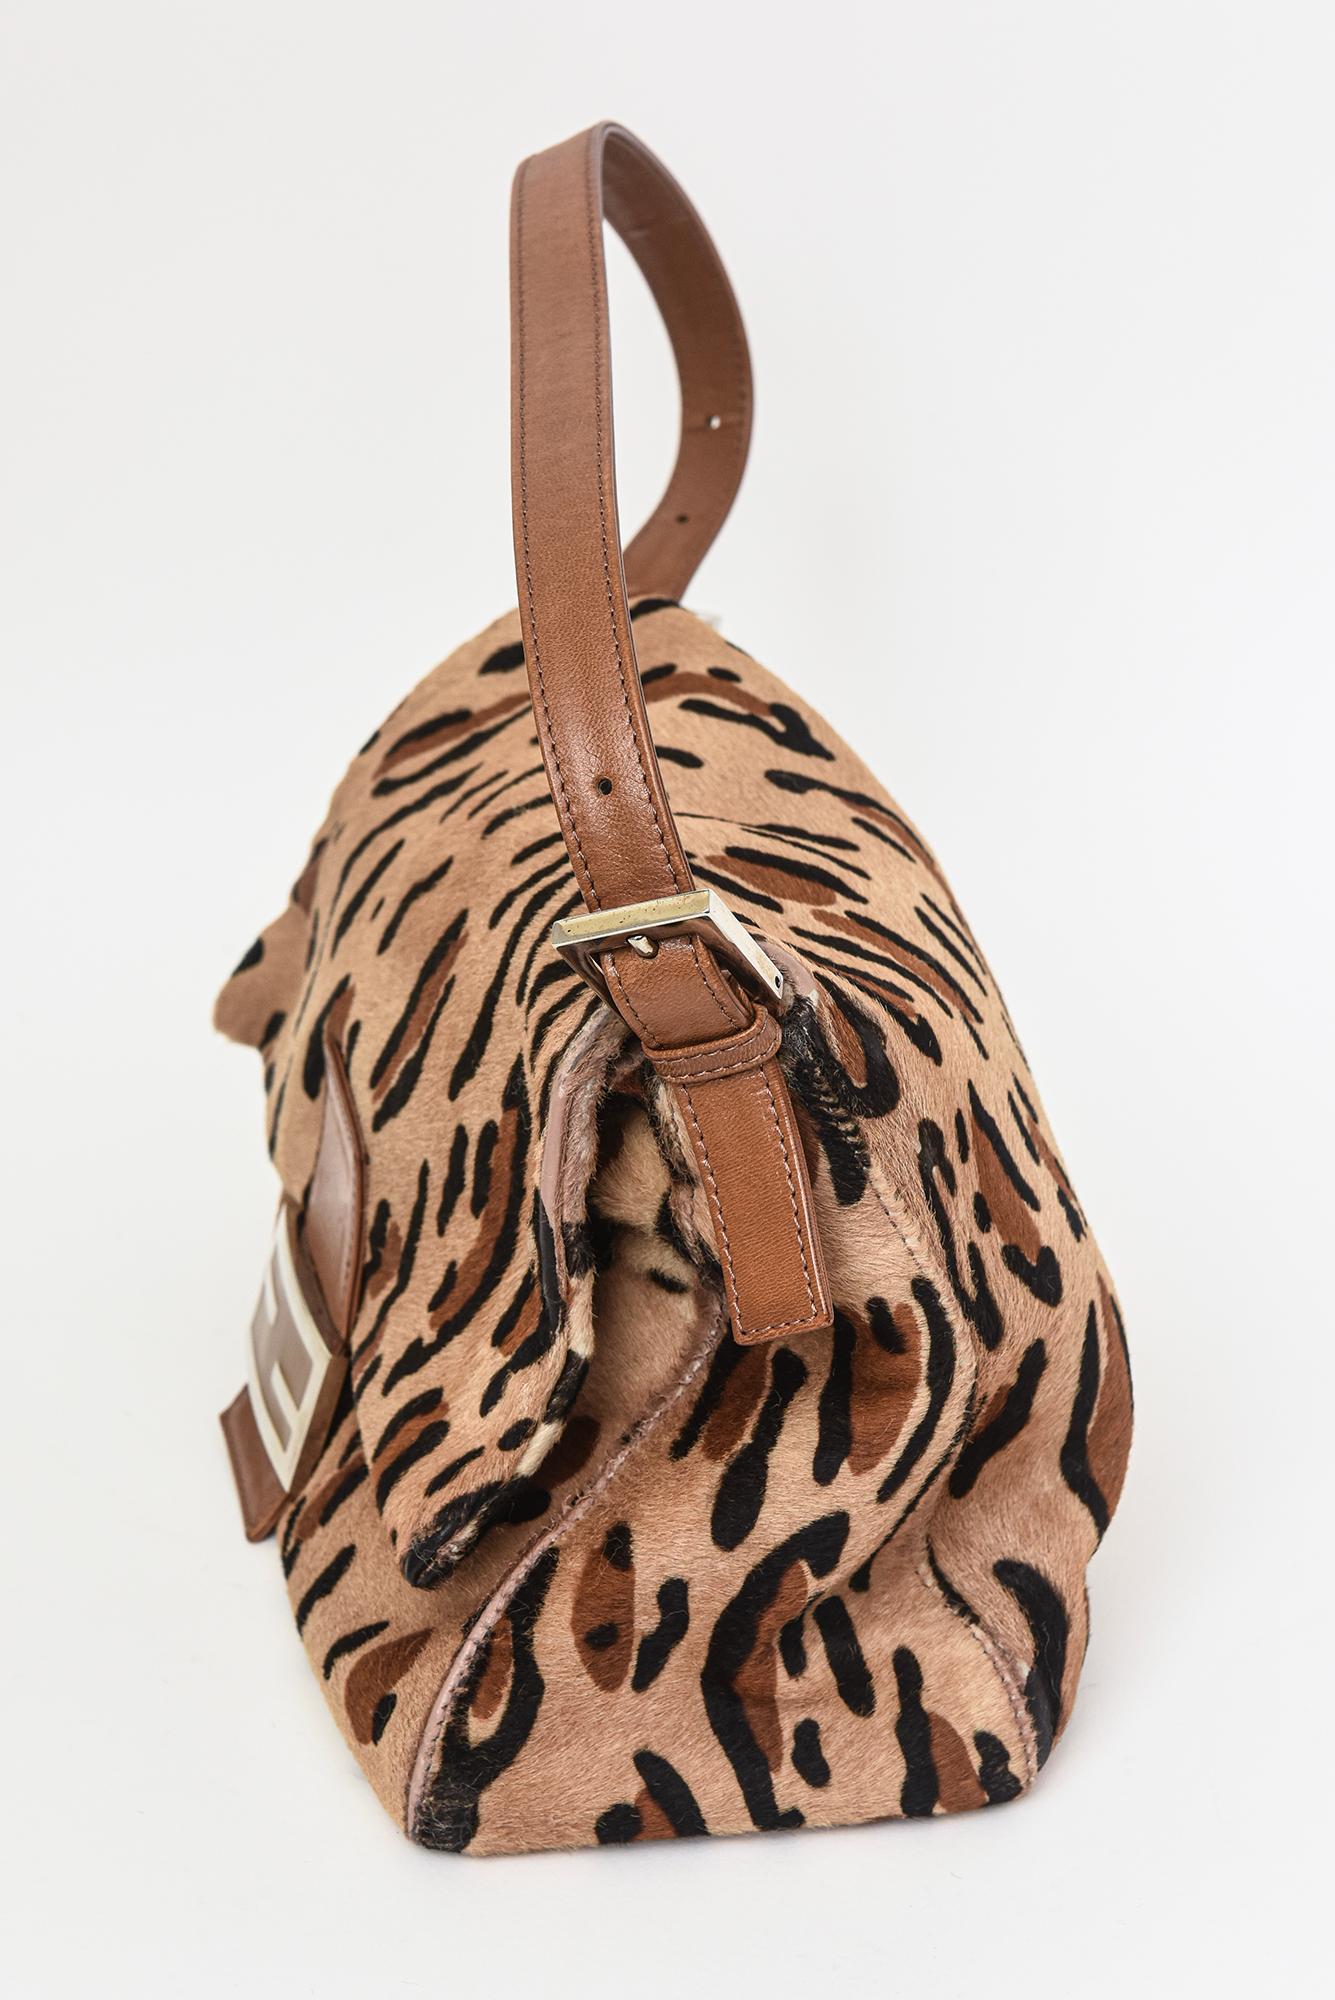 Fendi Leopard Print Pony Hair Mama Baguette Handbag With Leather Handle  3